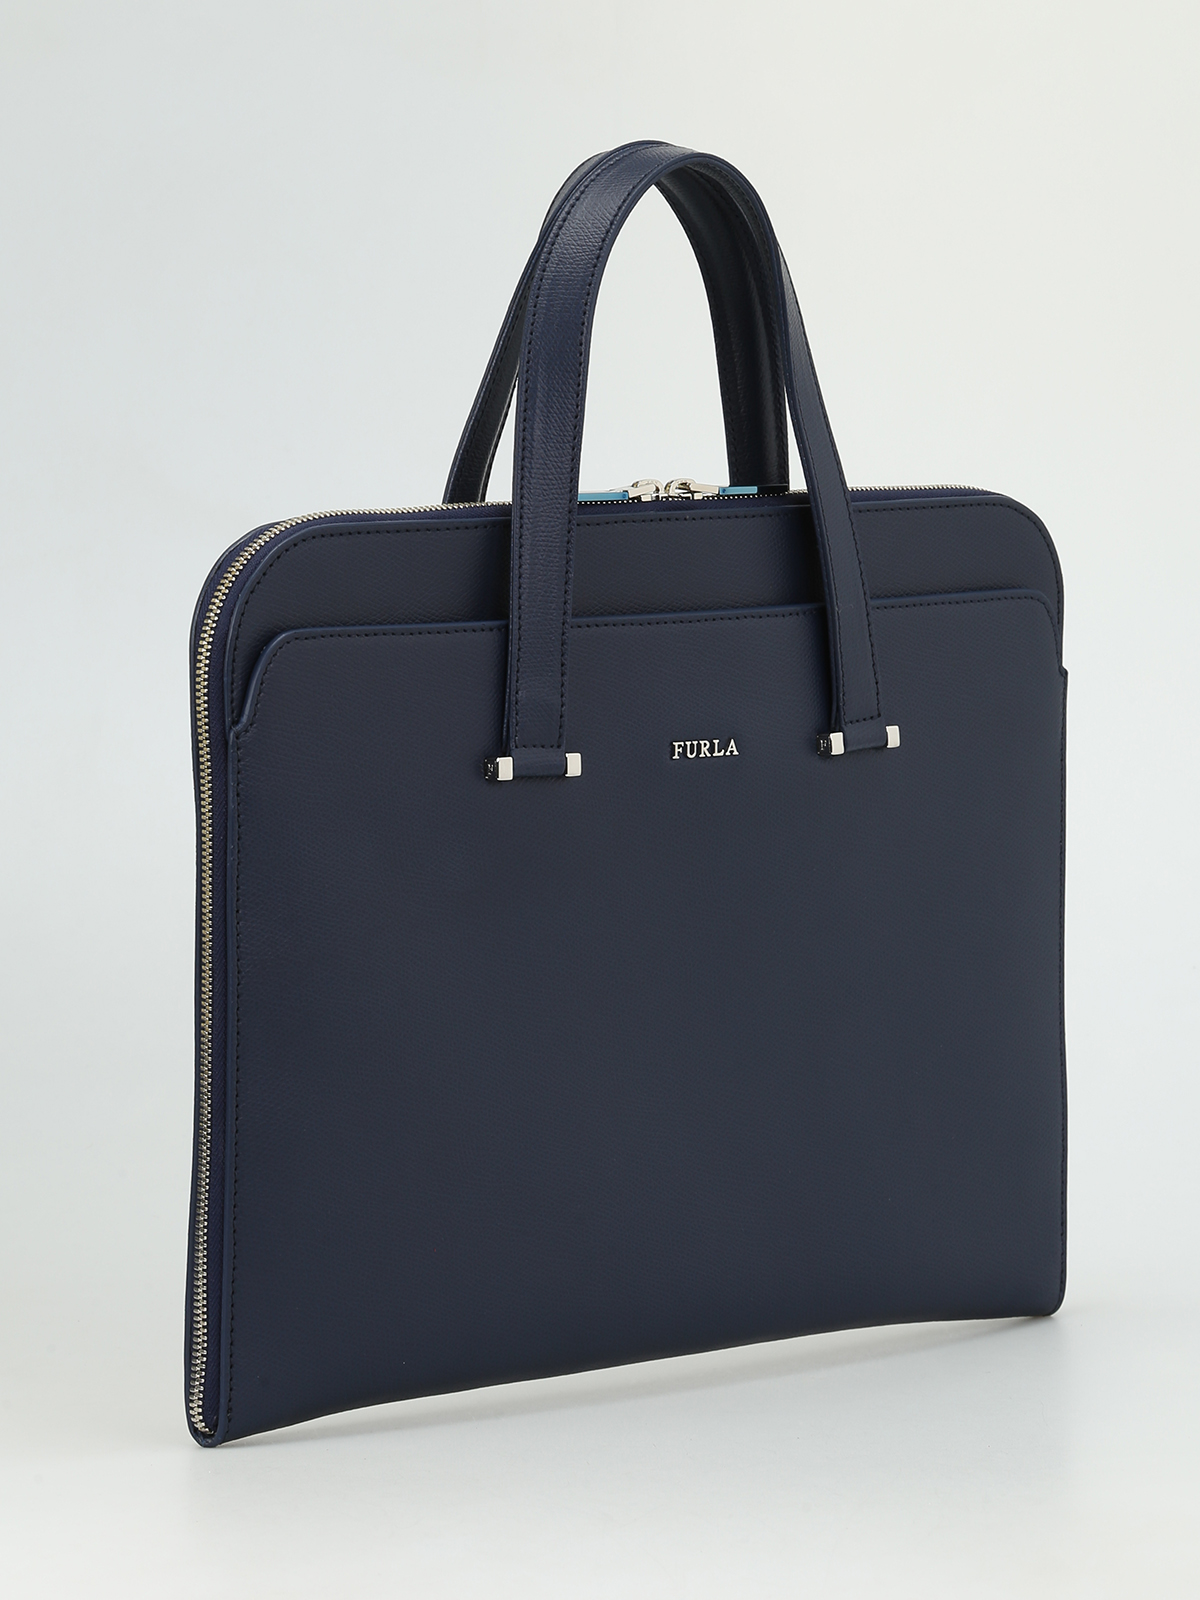 strand prins Groenteboer Laptop bags & briefcases Furla - Man Vulcano briefcase - 867391